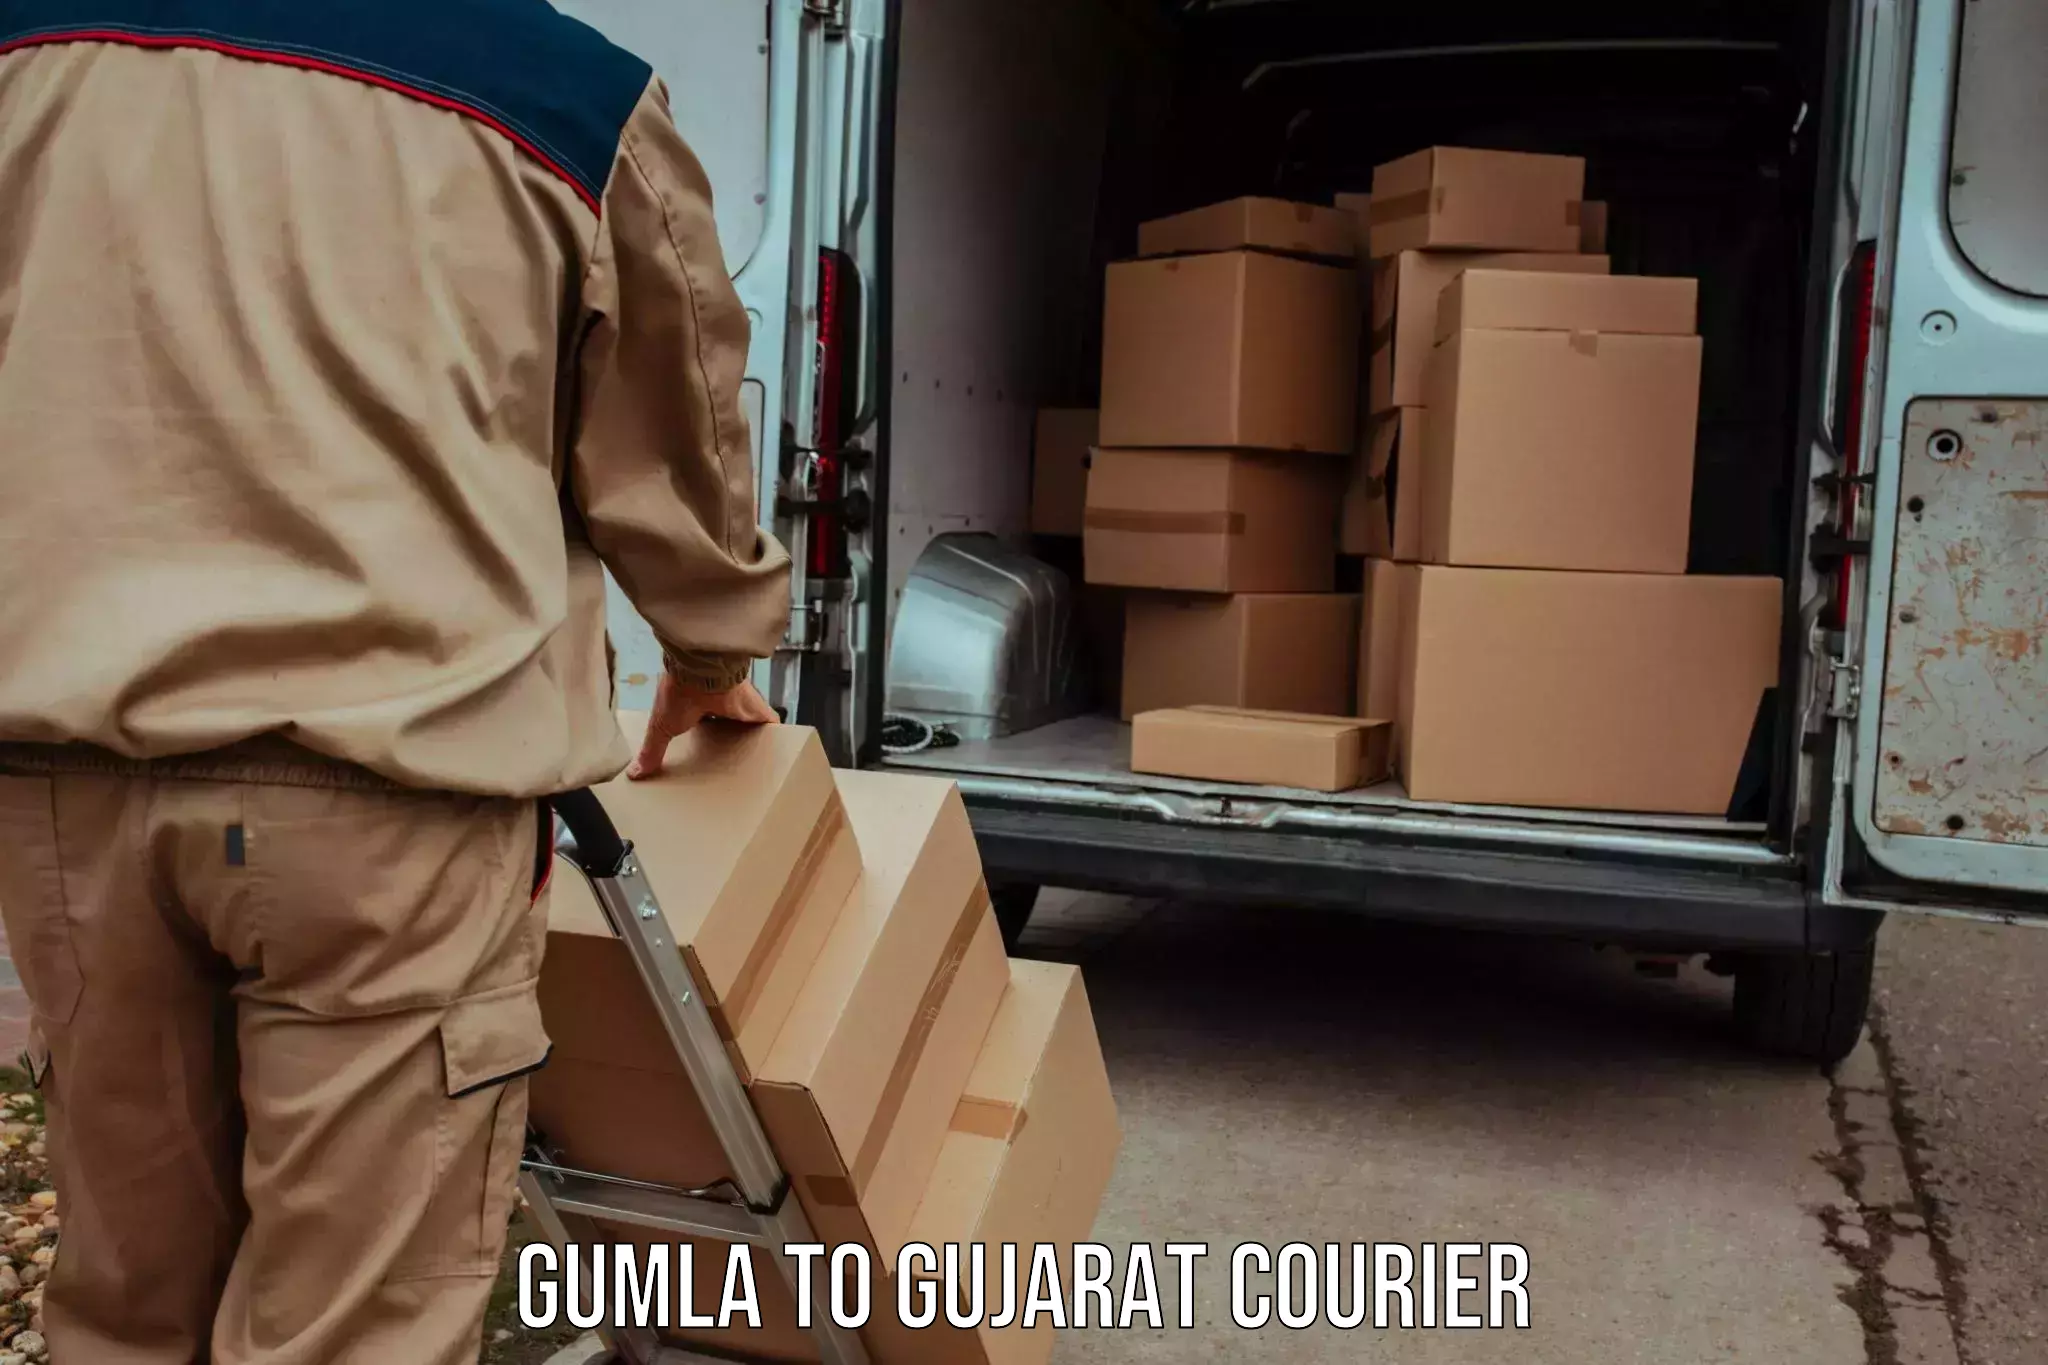 Next-day freight services Gumla to GIDC